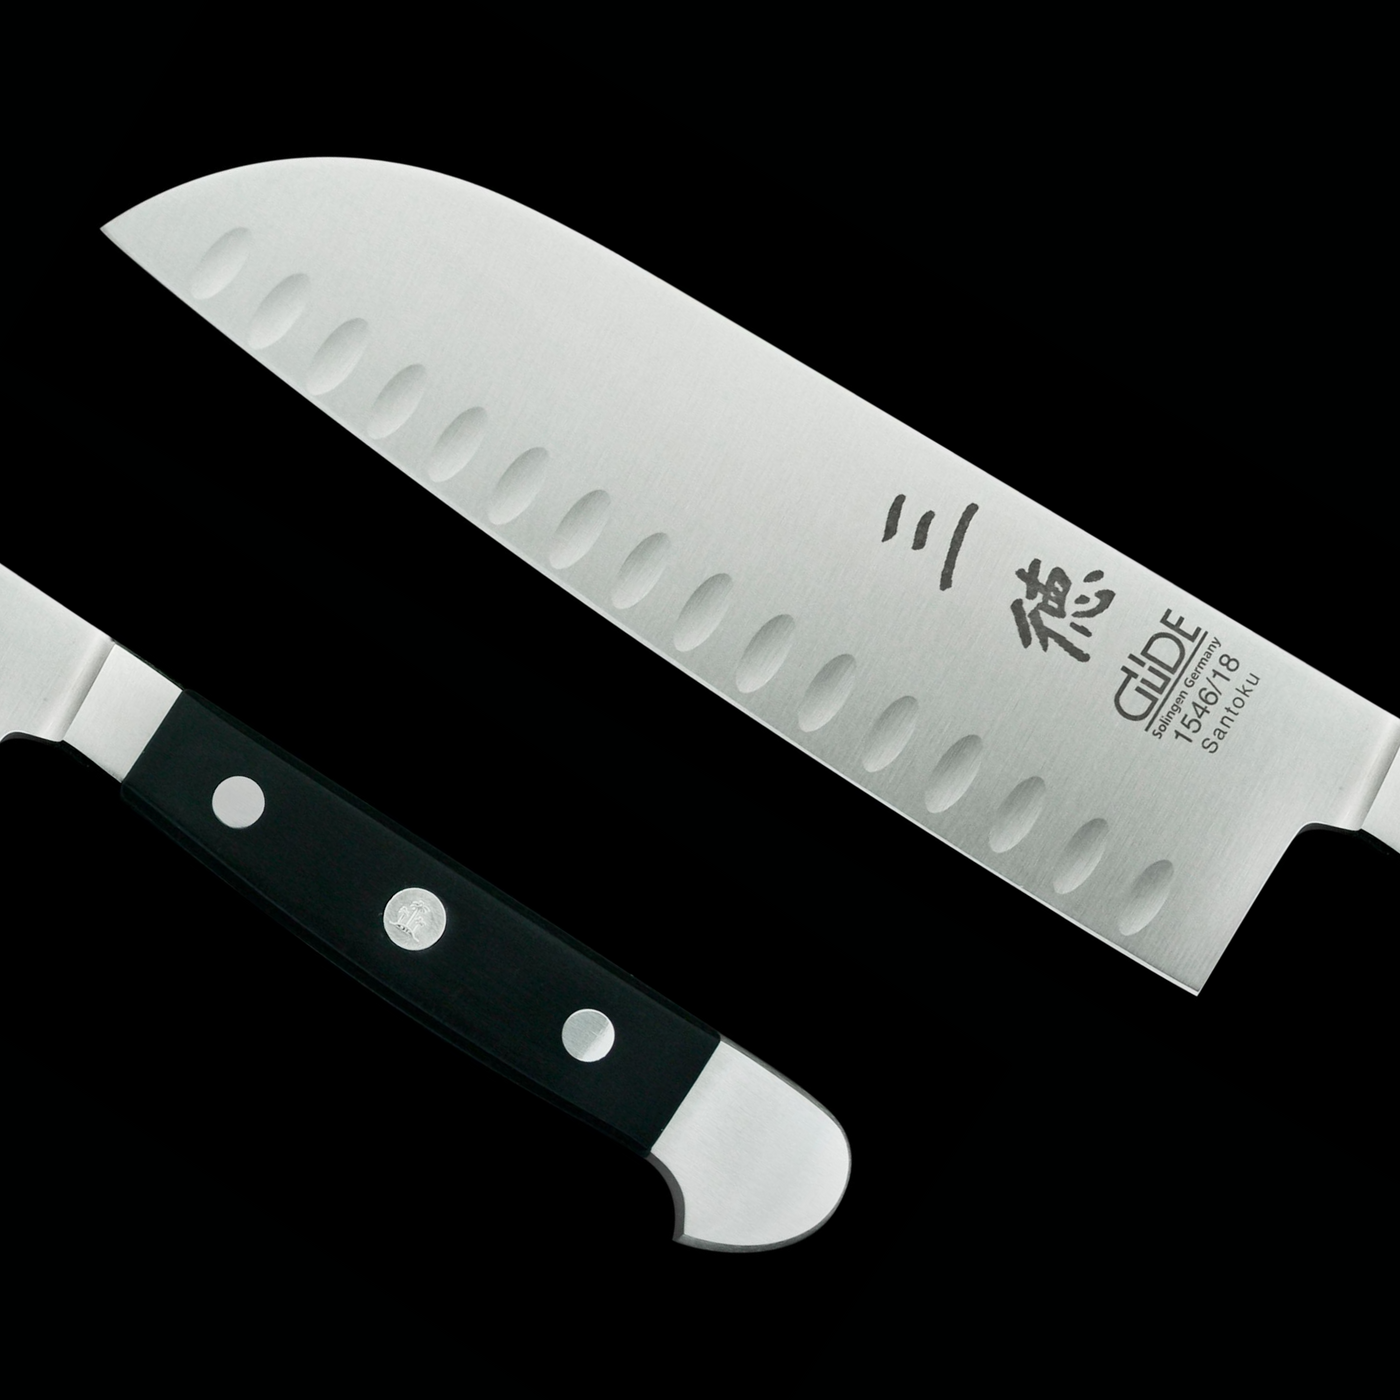 Gude Alpha Santoku Knife With Black Hostaform Handle, 7-in - Kitchen Universe